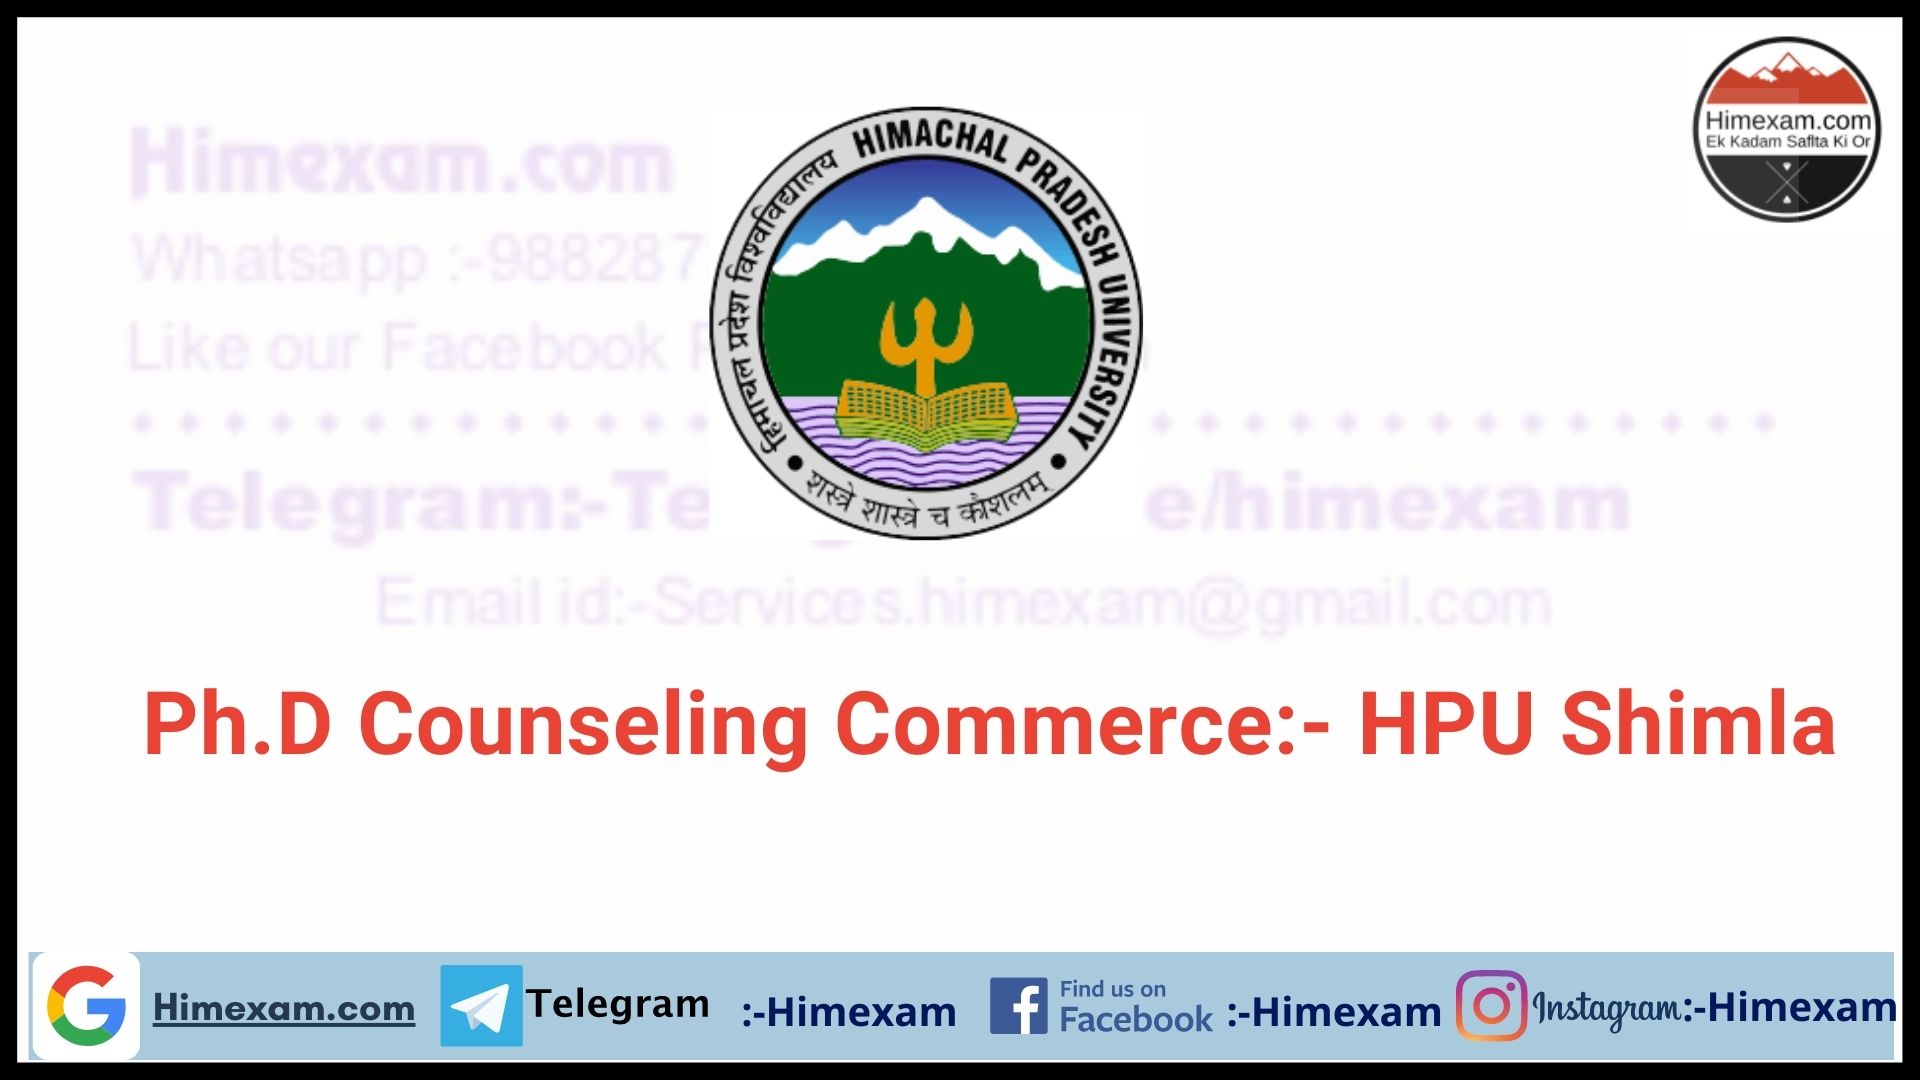 Ph.D Counseling Commerce:- HPU Shimla